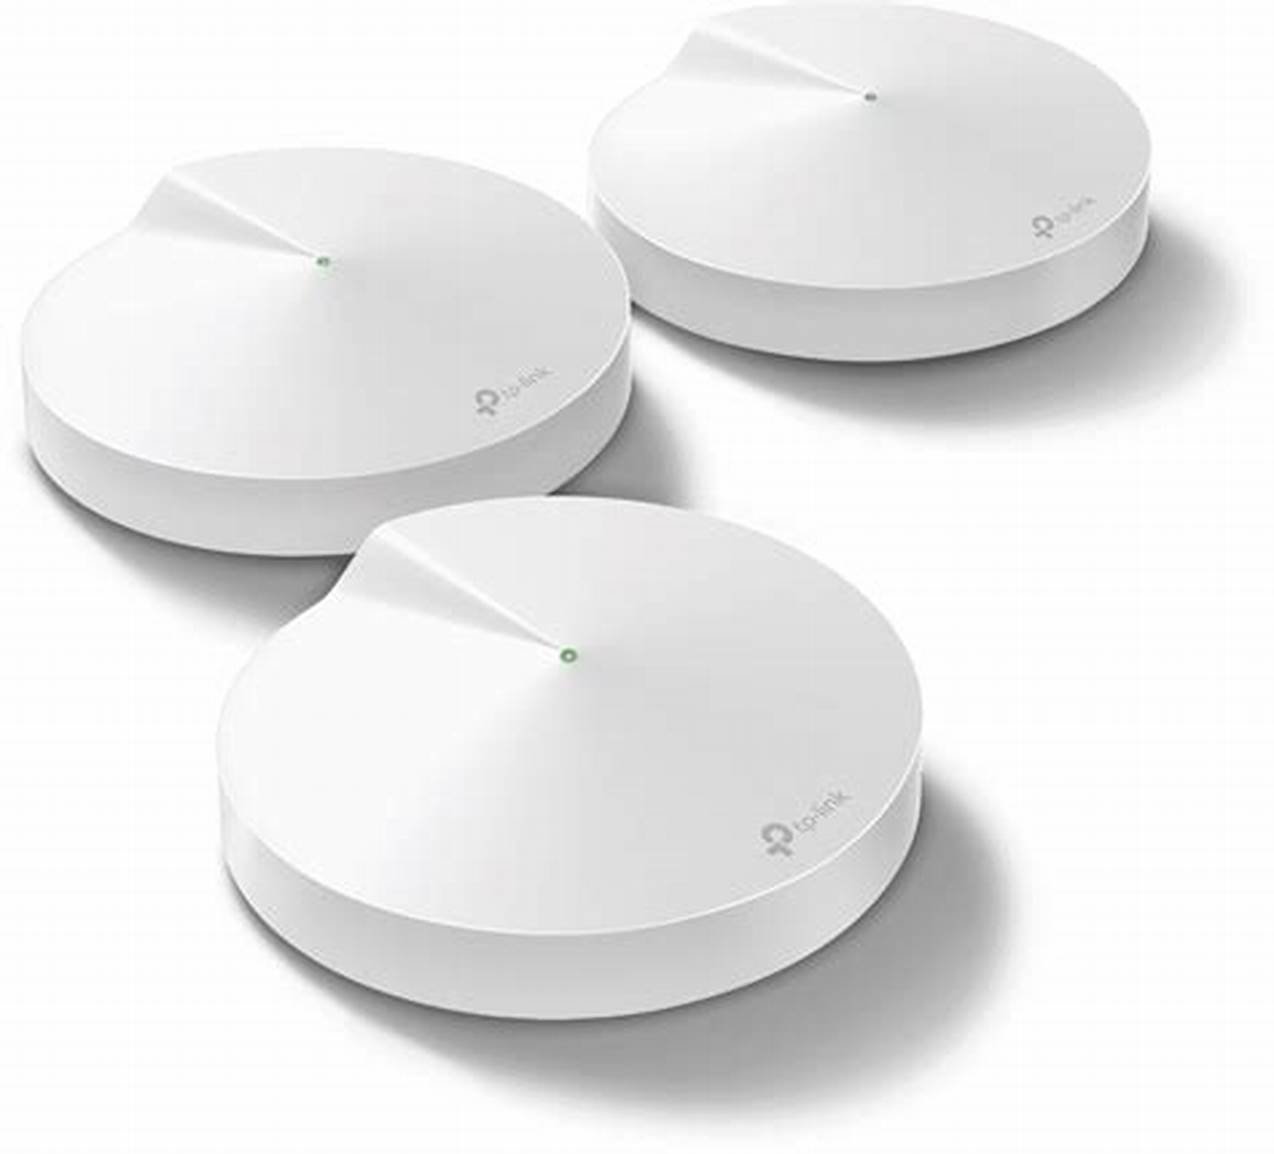 TP-LinkAC2200 Smart Home Mesh Wi-Fi System
Deco M9 Plus (3-Pack)